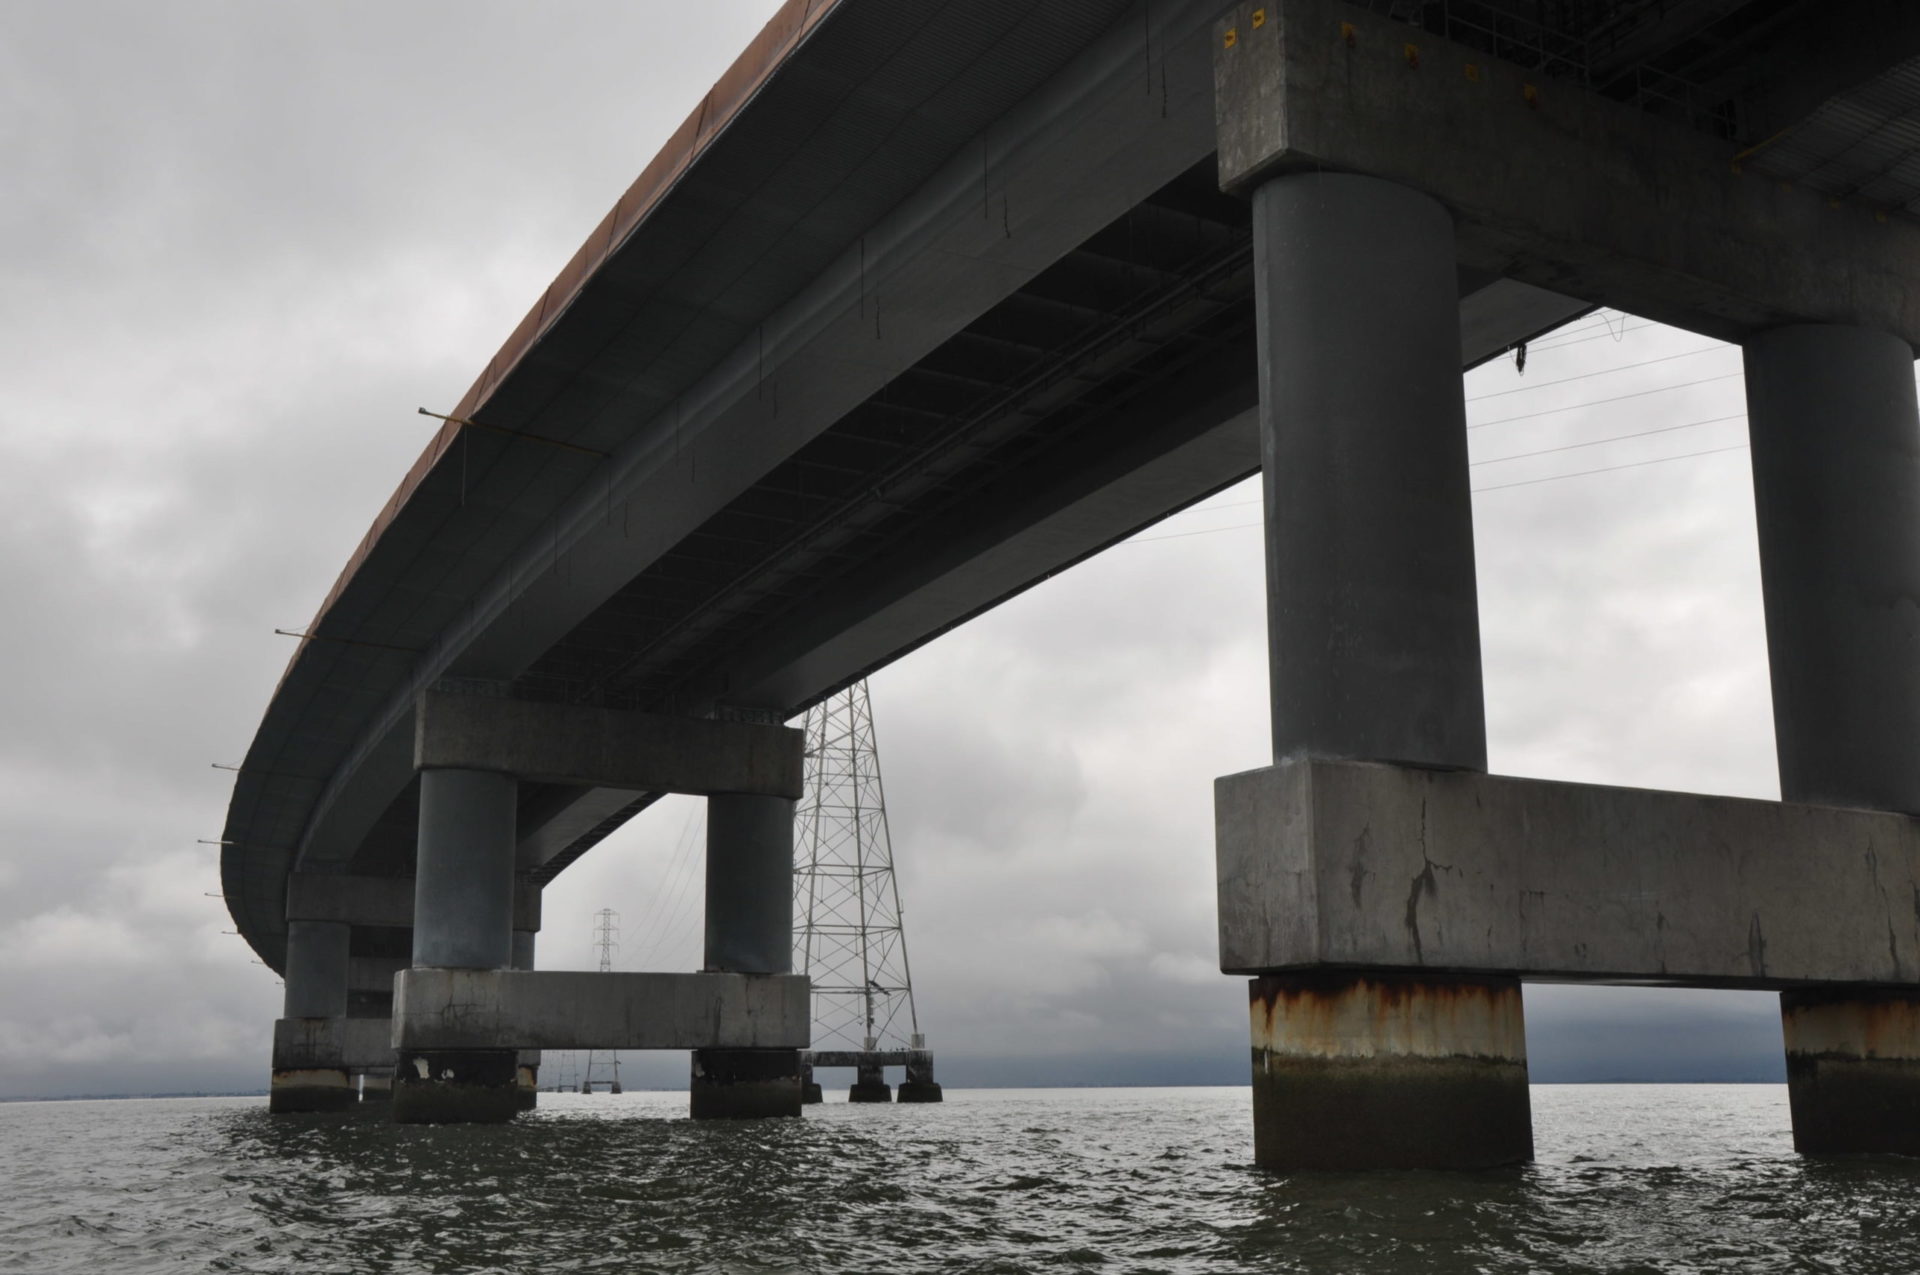 Image from the Gallery: San Mateo – Hayward Bridge